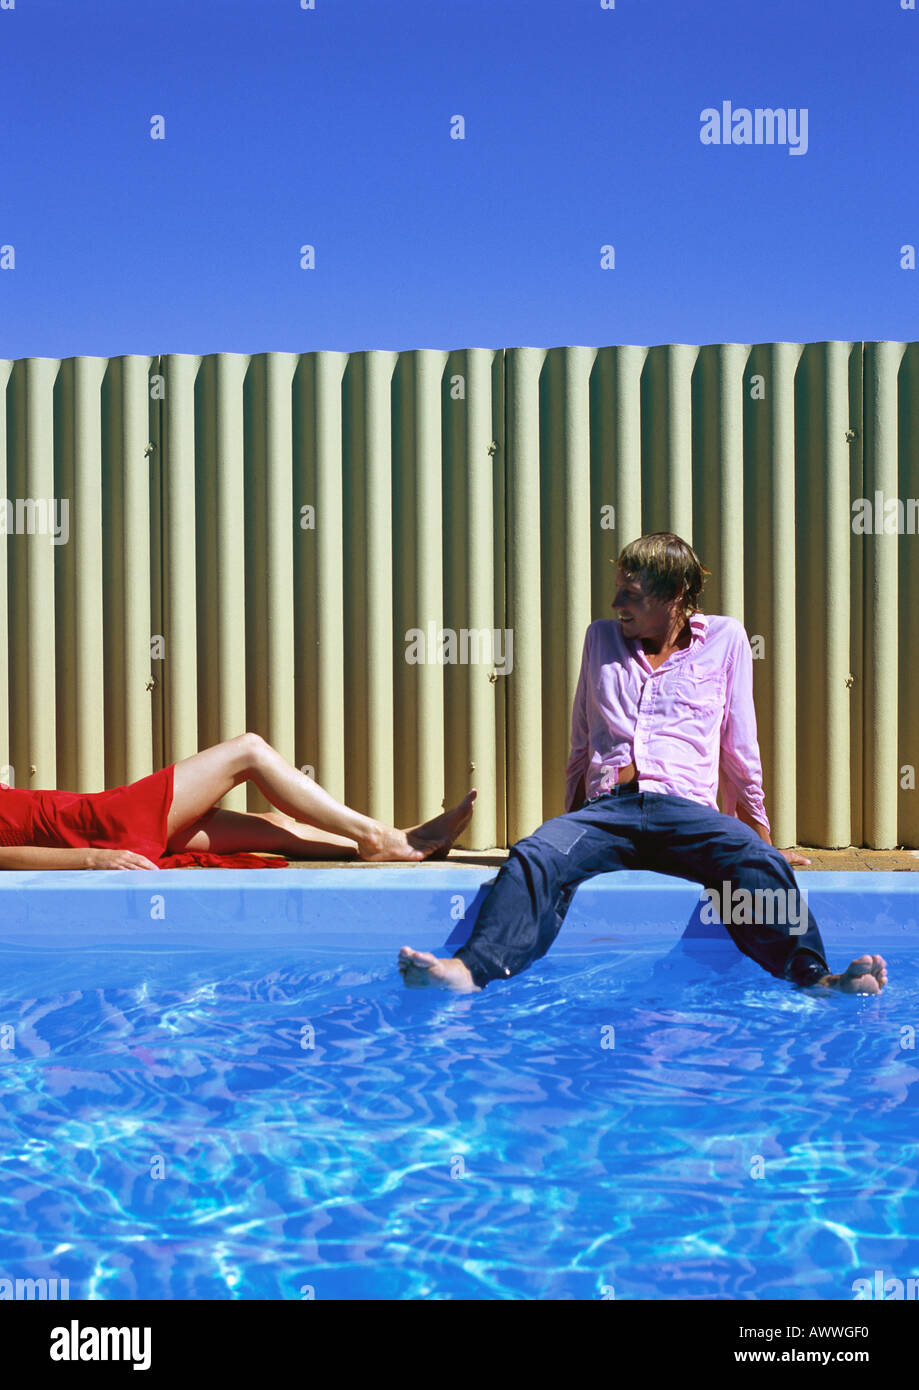 Man and Woman relaxing by swimming pool, homme trempant les pieds dans l'eau Banque D'Images